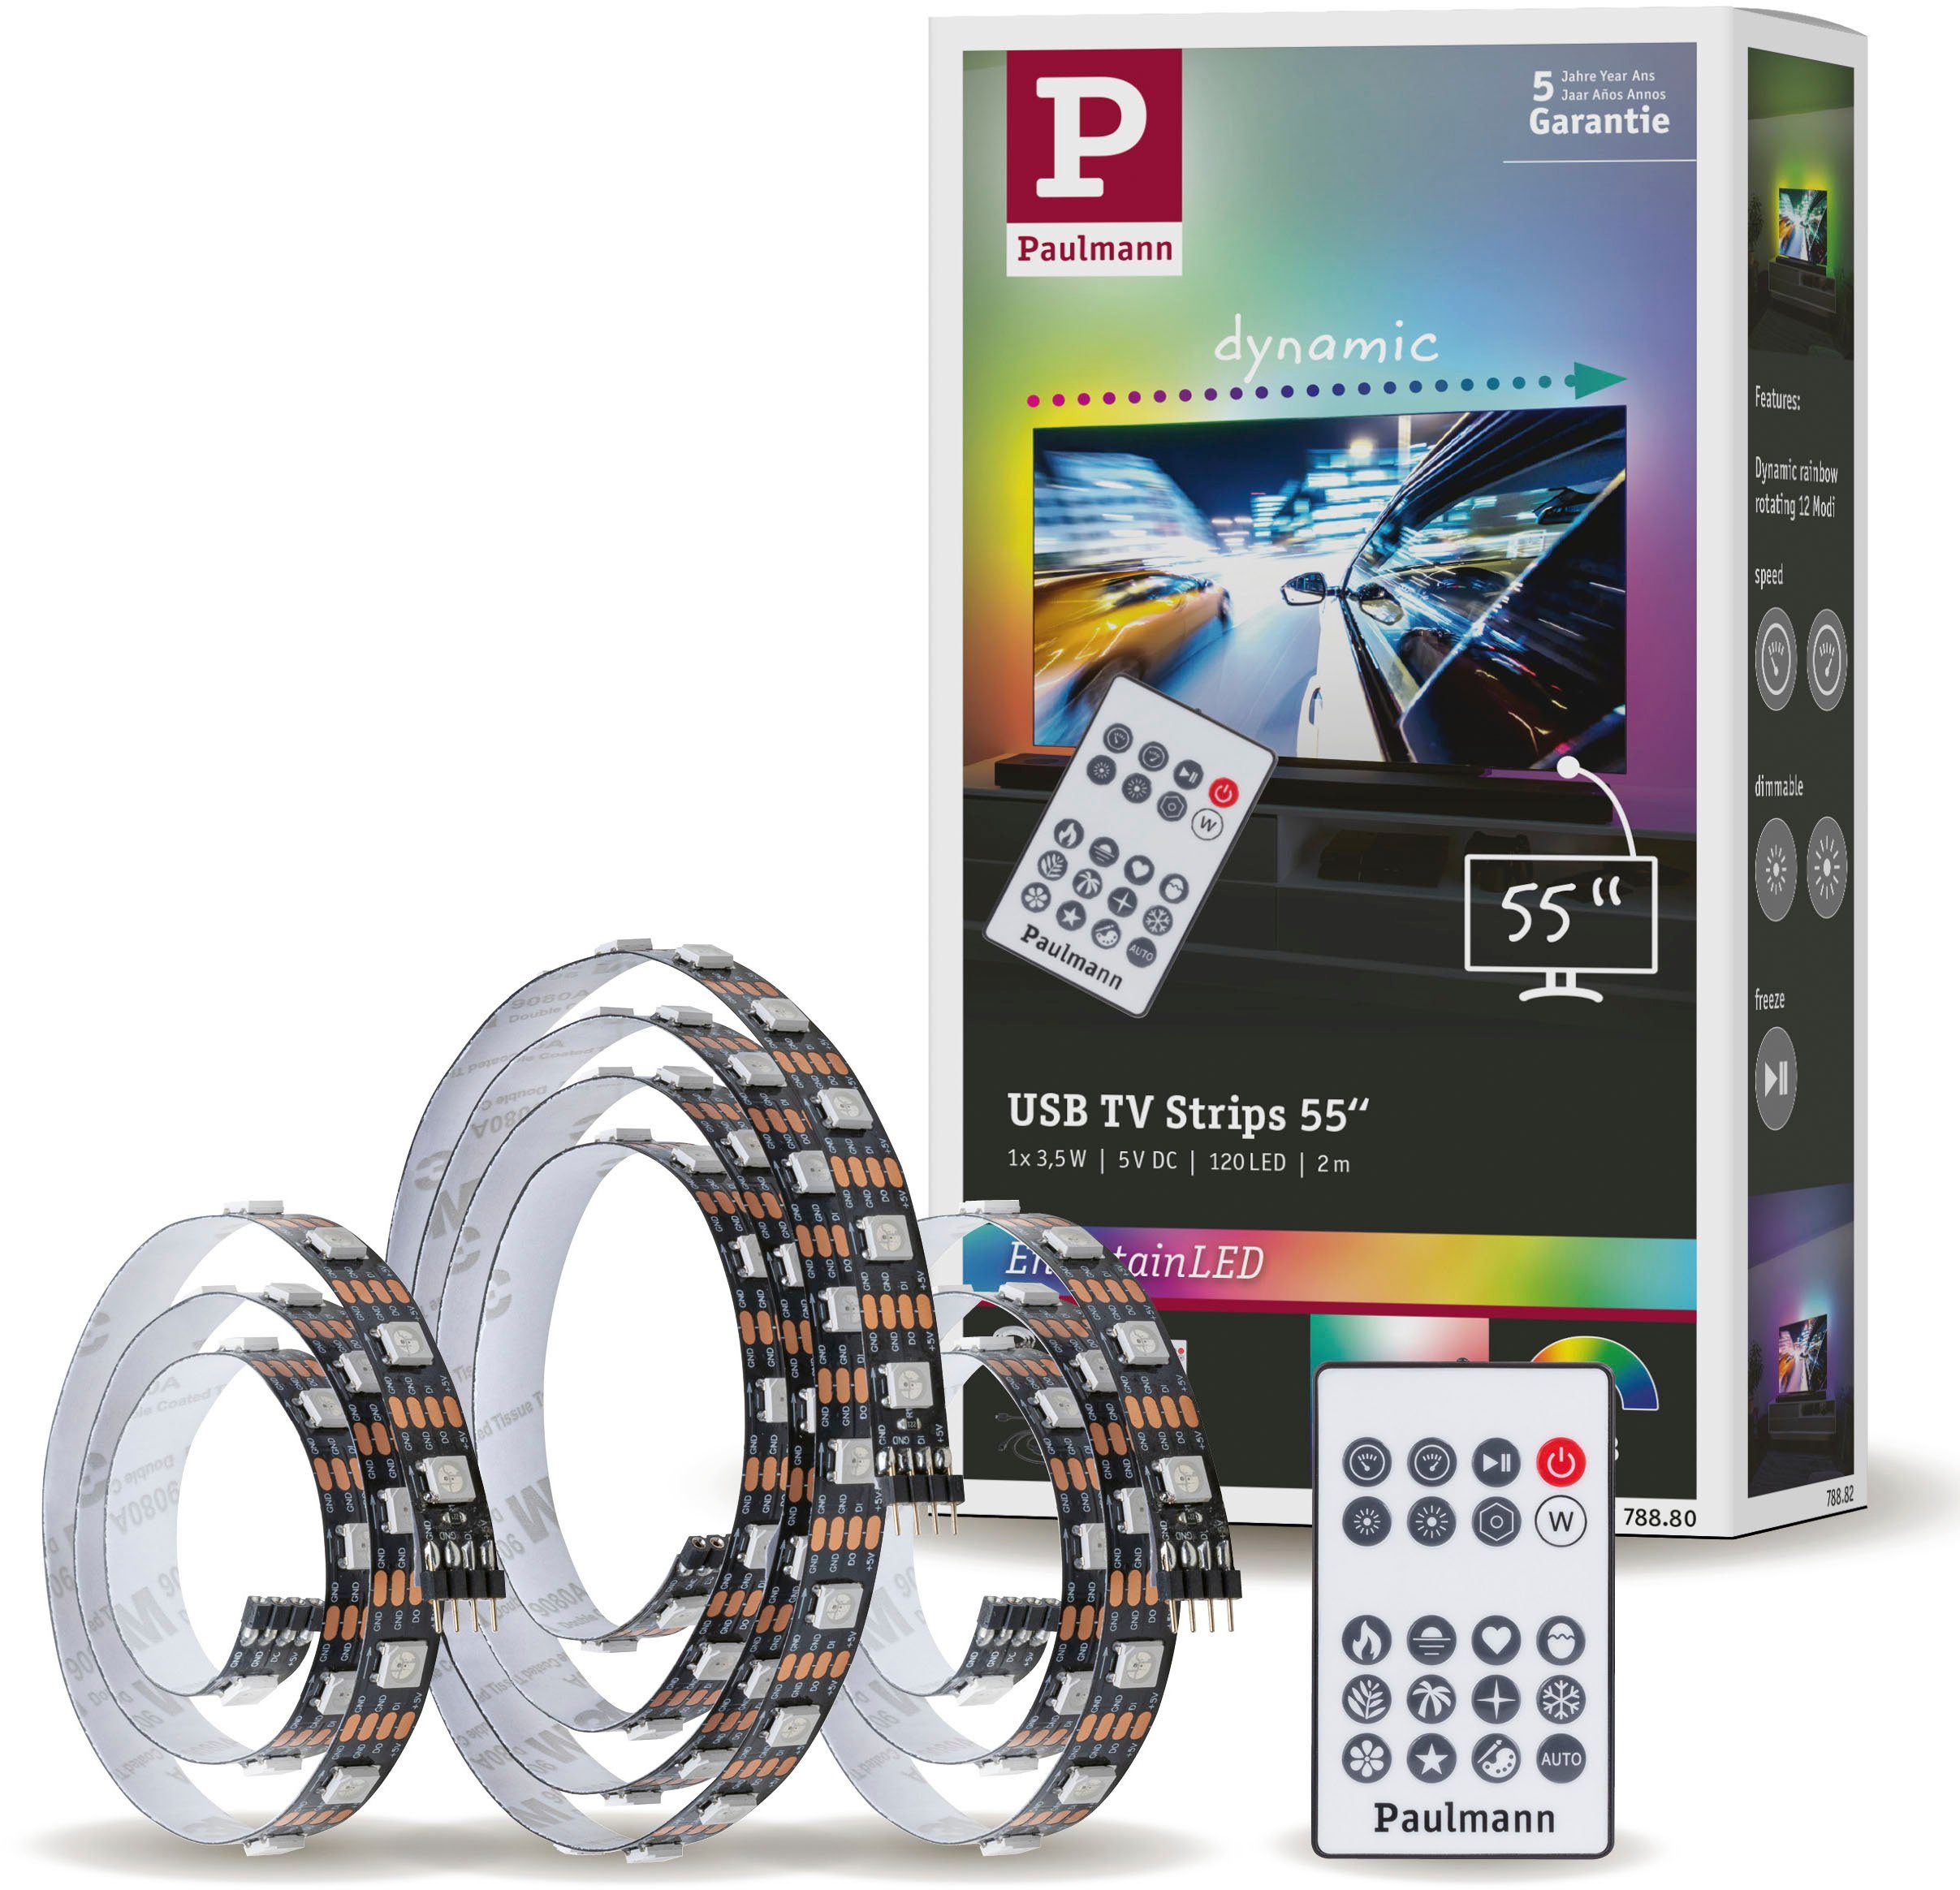 Paulmann LED-Streifen USB LED Strip TV-Beleuchtung 55 Zoll 2m Dynamic Rainbow RGB 3,5W, 1-flammig | LED-Stripes